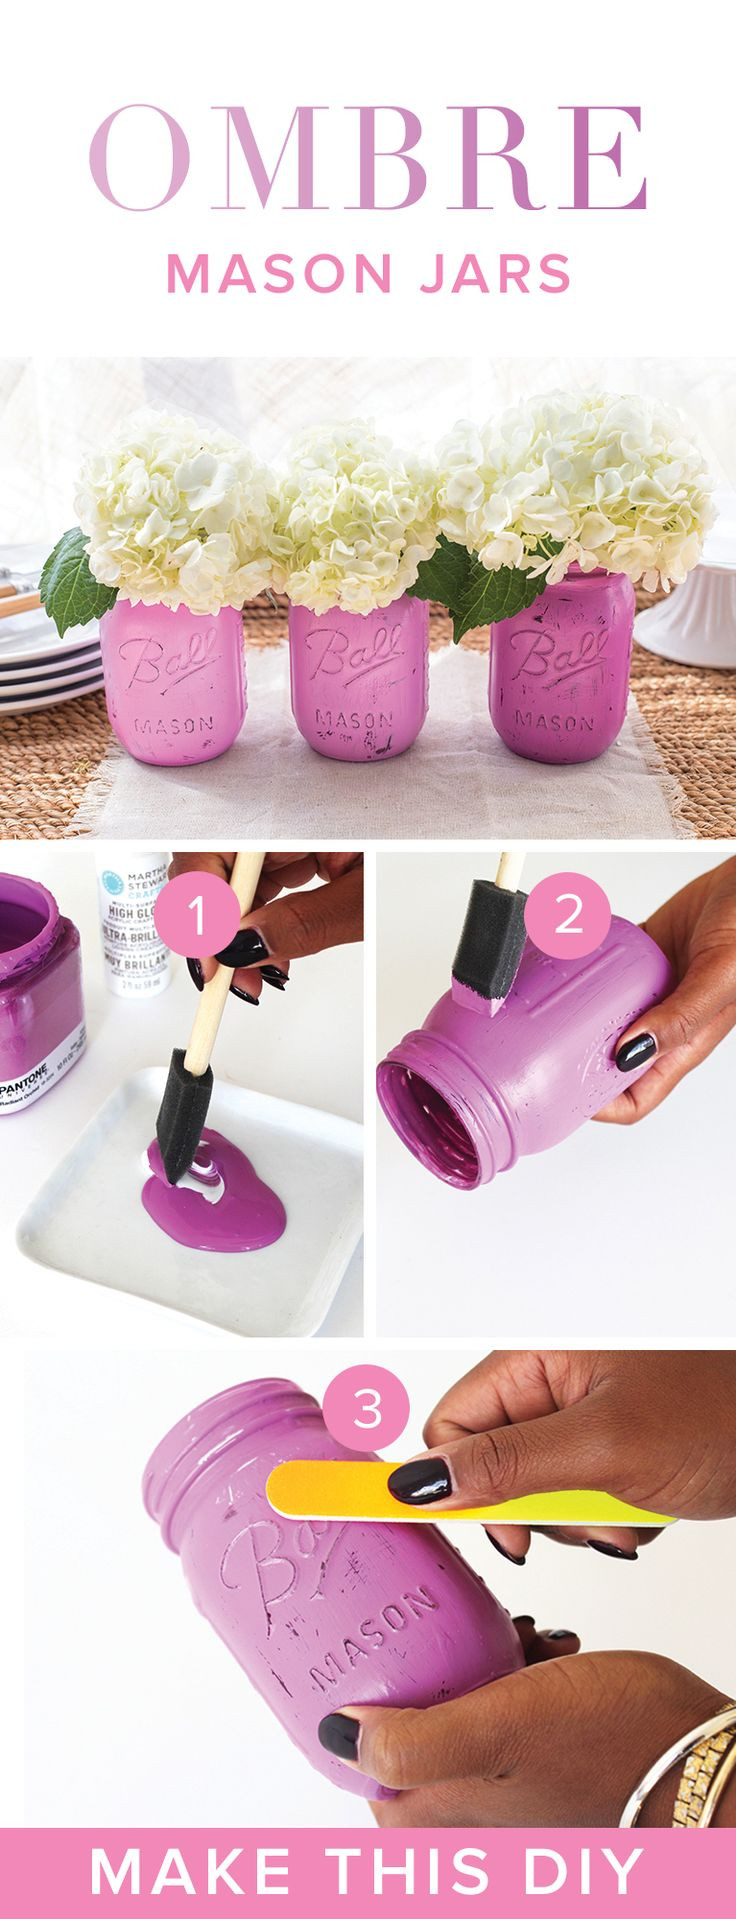 Best ideas about Mason Jar DIY
. Save or Pin Ten Inspirational DIY Mason Jar Ideas For Weddings Now.